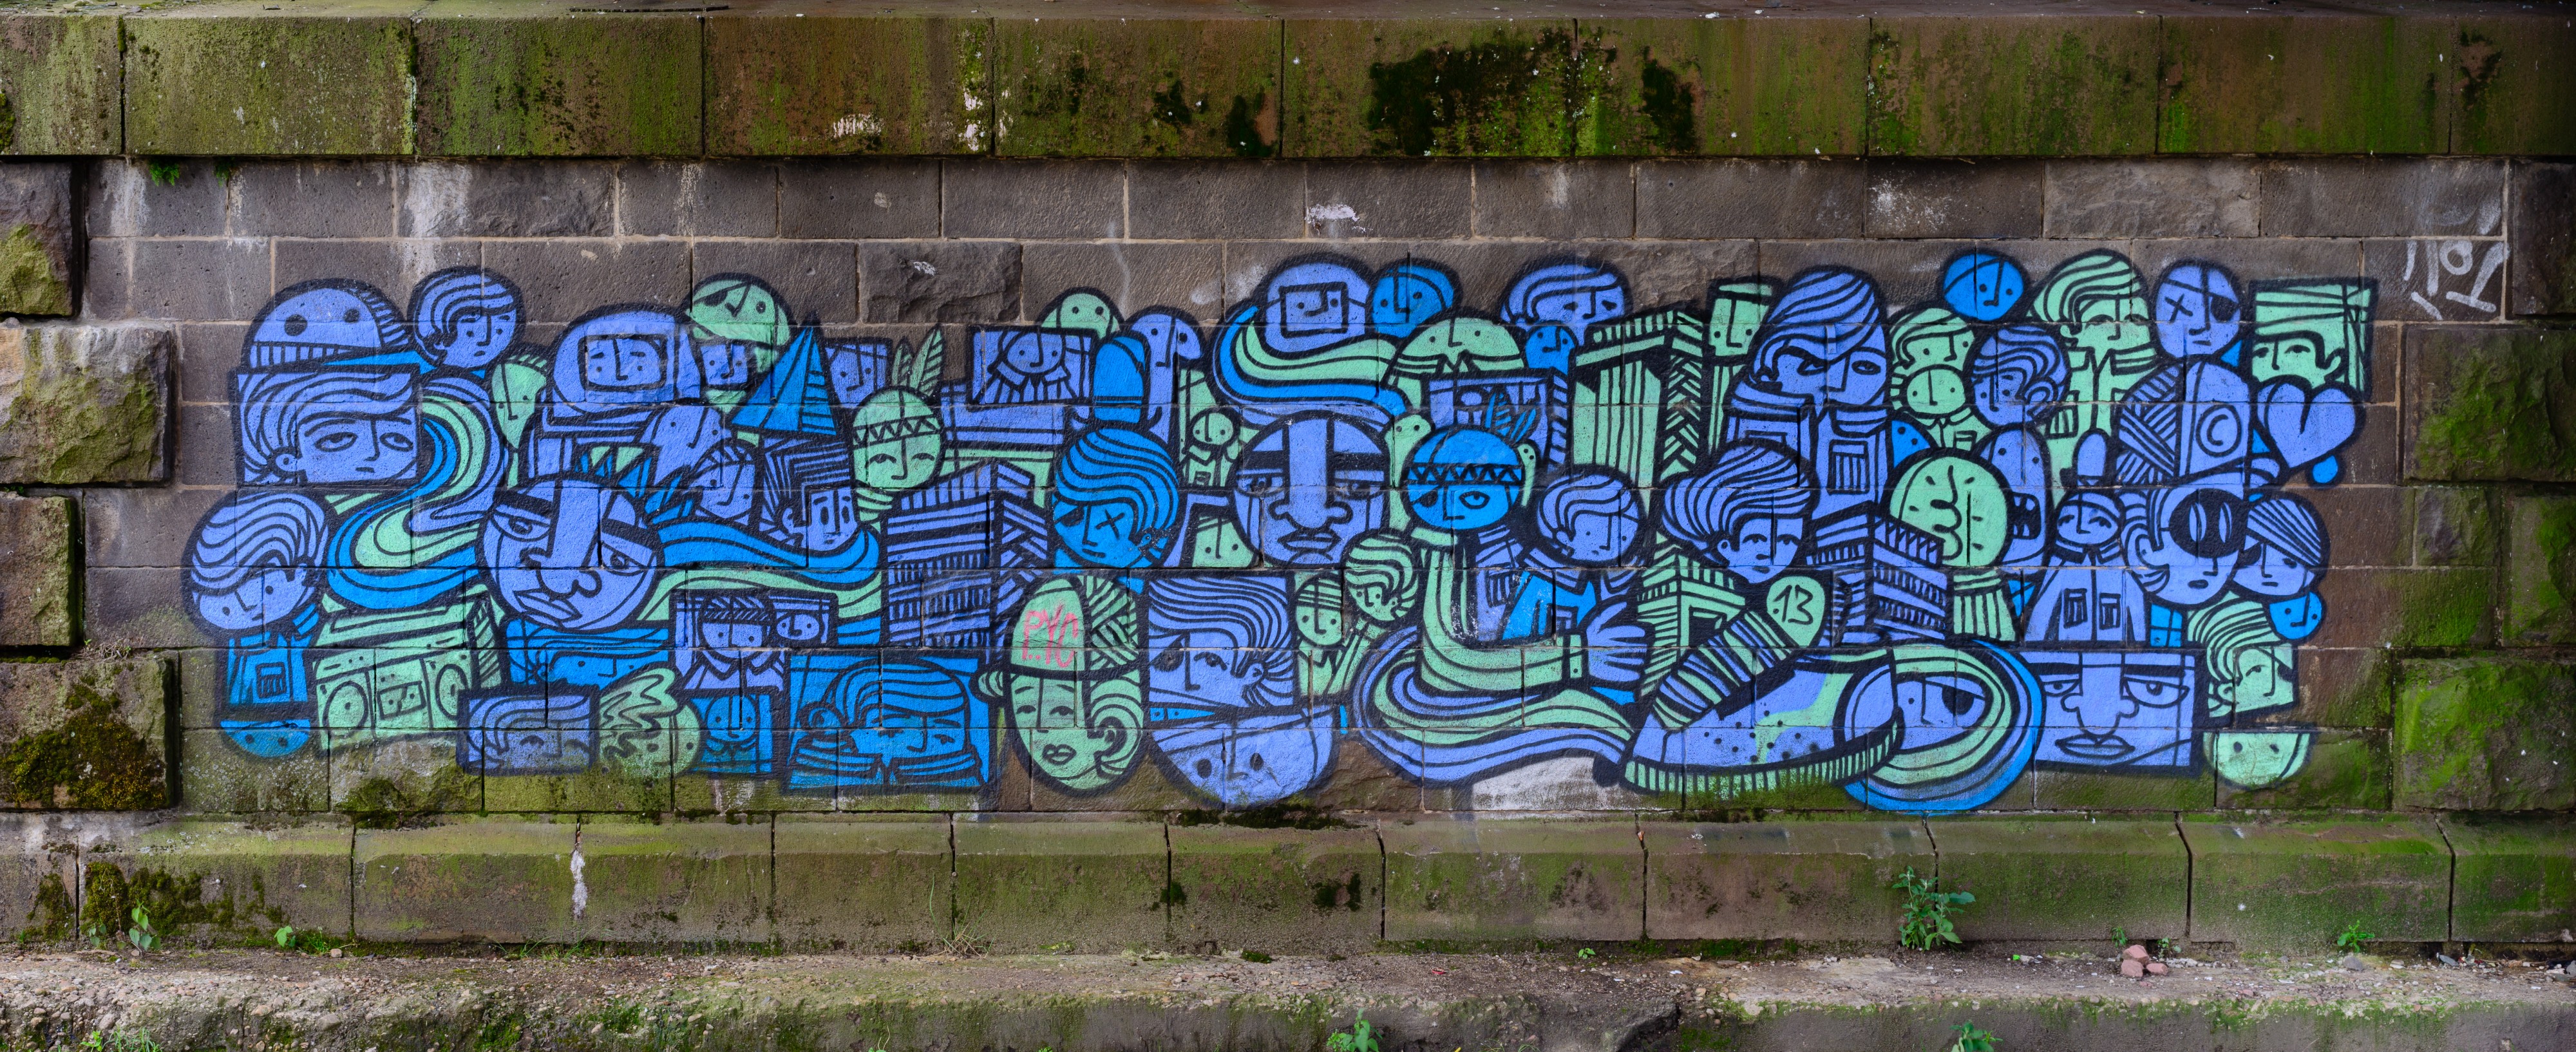 03-05-2014 - Graffiti below a railway bridge - Frankfurt Main - Germany - 01